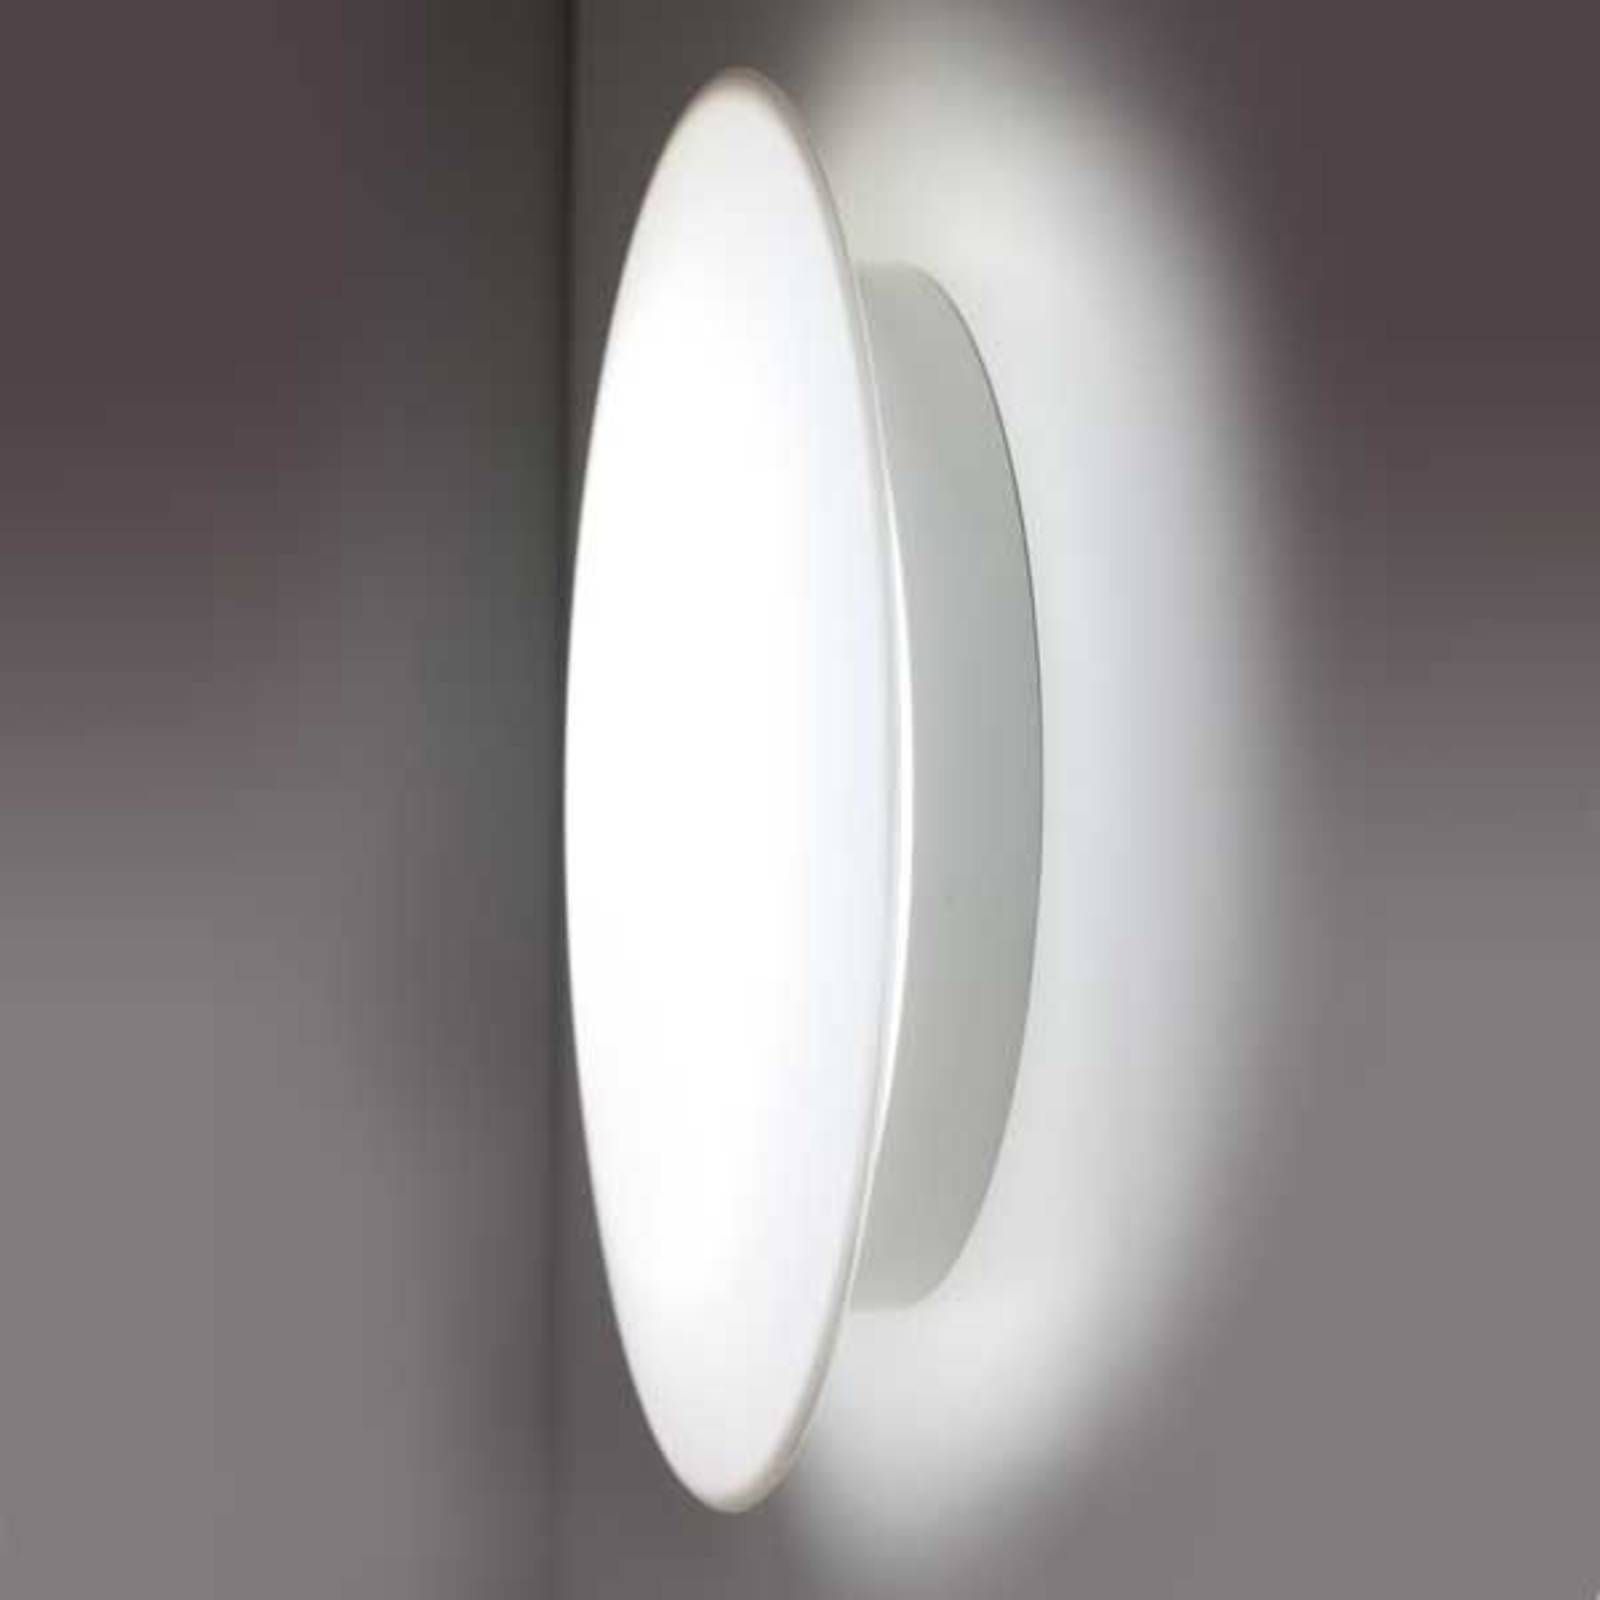 Akzentlicht Nástenné LED svietidlo Sun 3 z plastu 4 000 K 8 W, Obývacia izba / jedáleň, ABS, polykarbonát, 8W